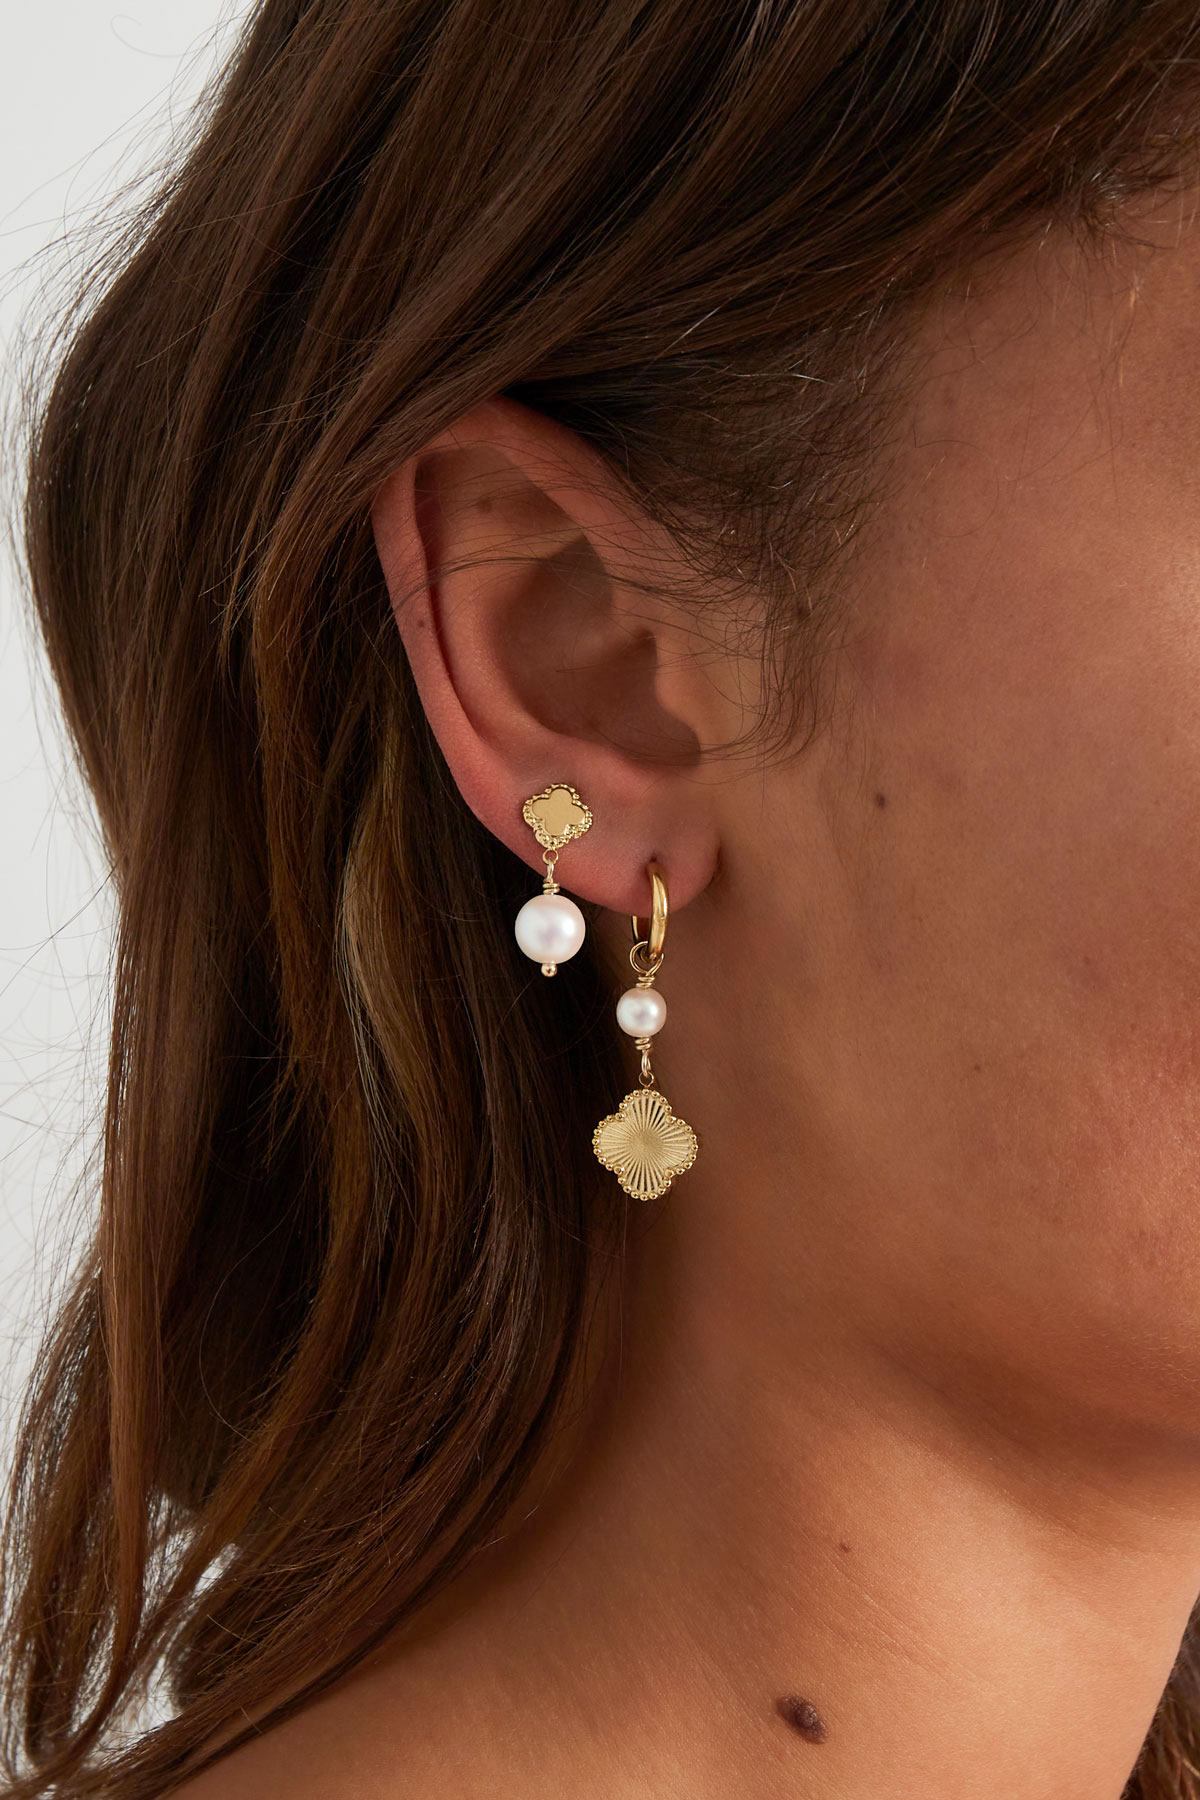 Ohrring mit Kleeblatt- und Perlenanhänger – Silber Bild3